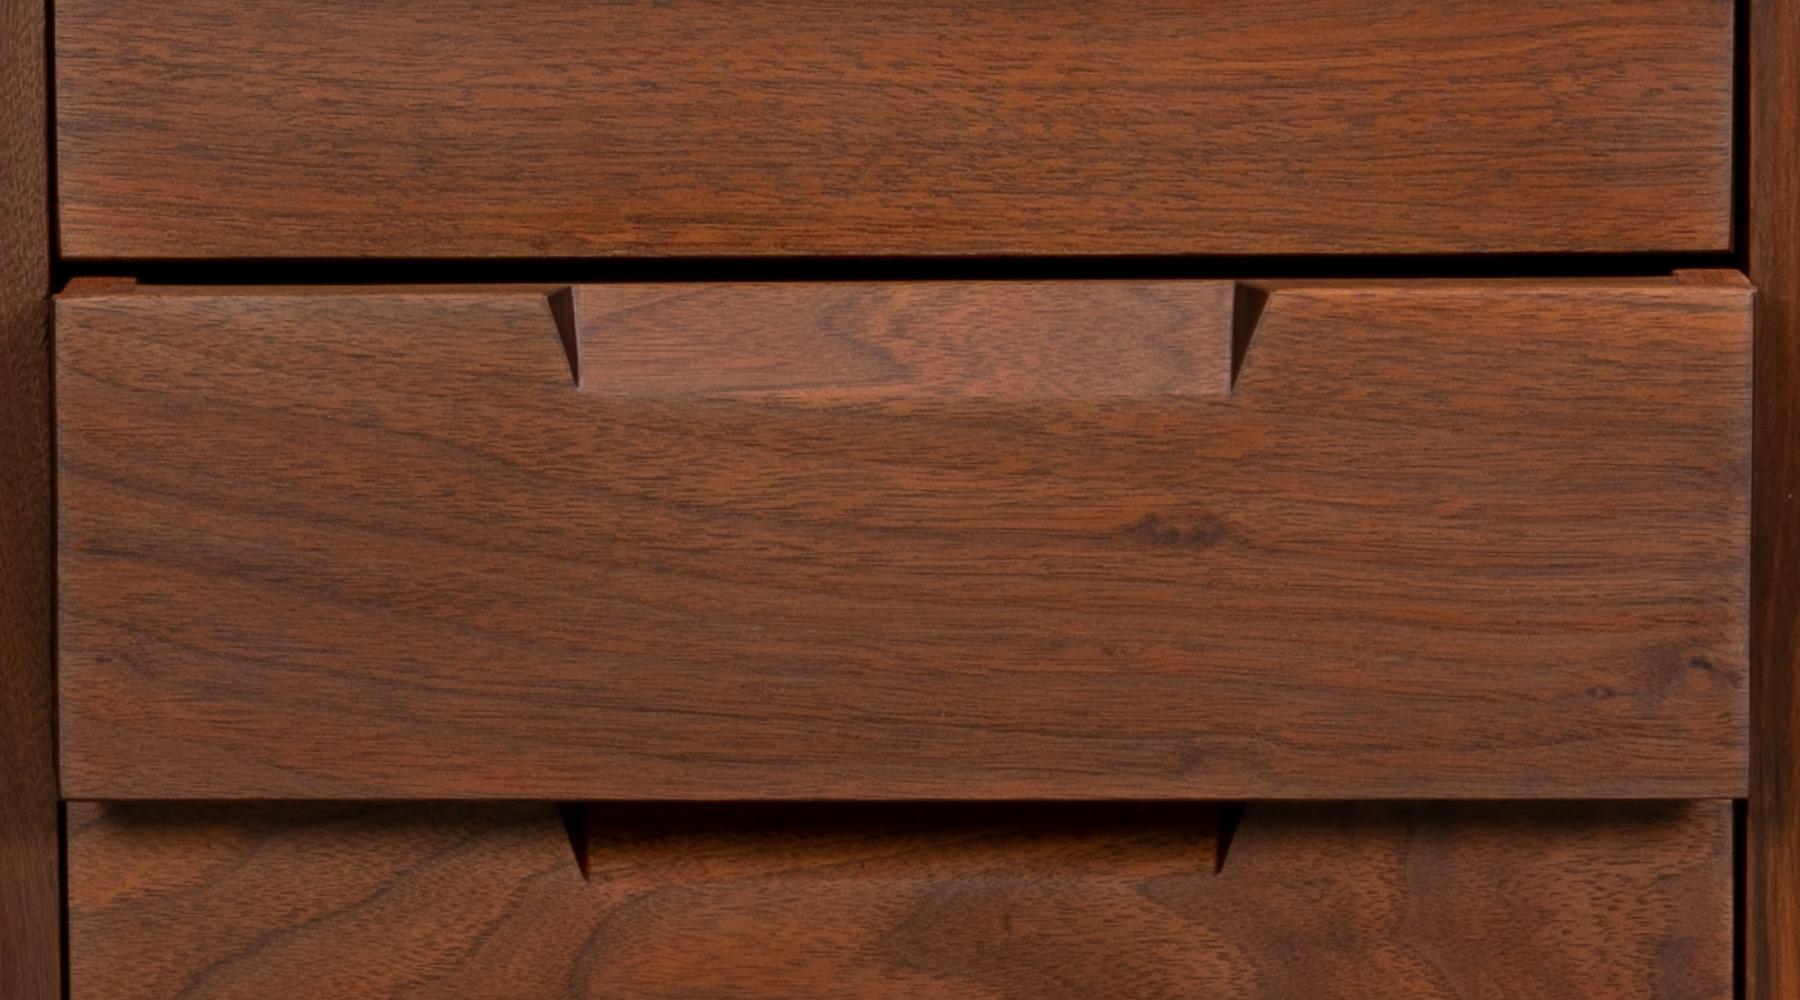 Walnut 1950s Brown Wooden Desk by George Nakashima 'c'